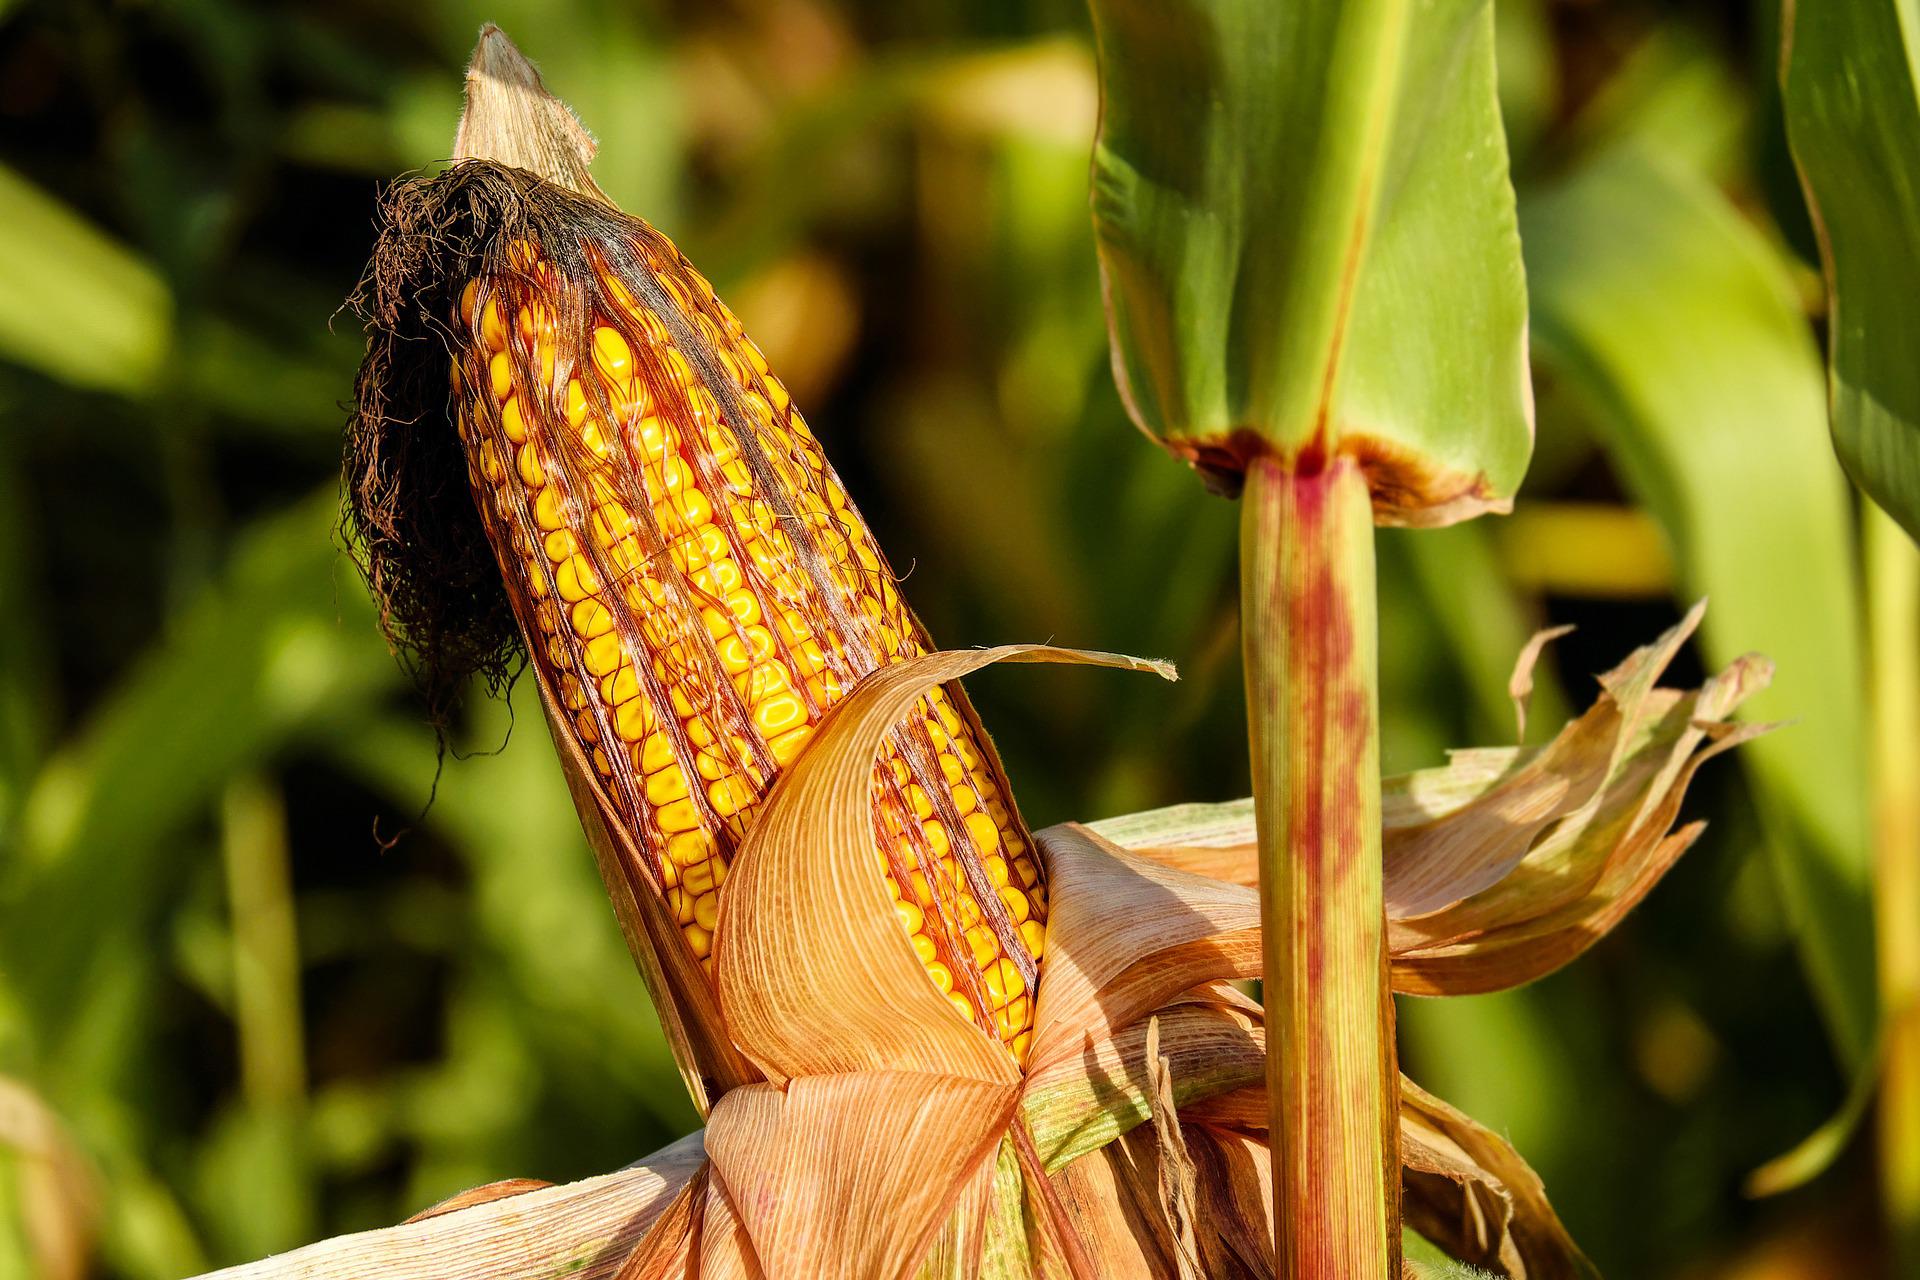 A cornfield close-up